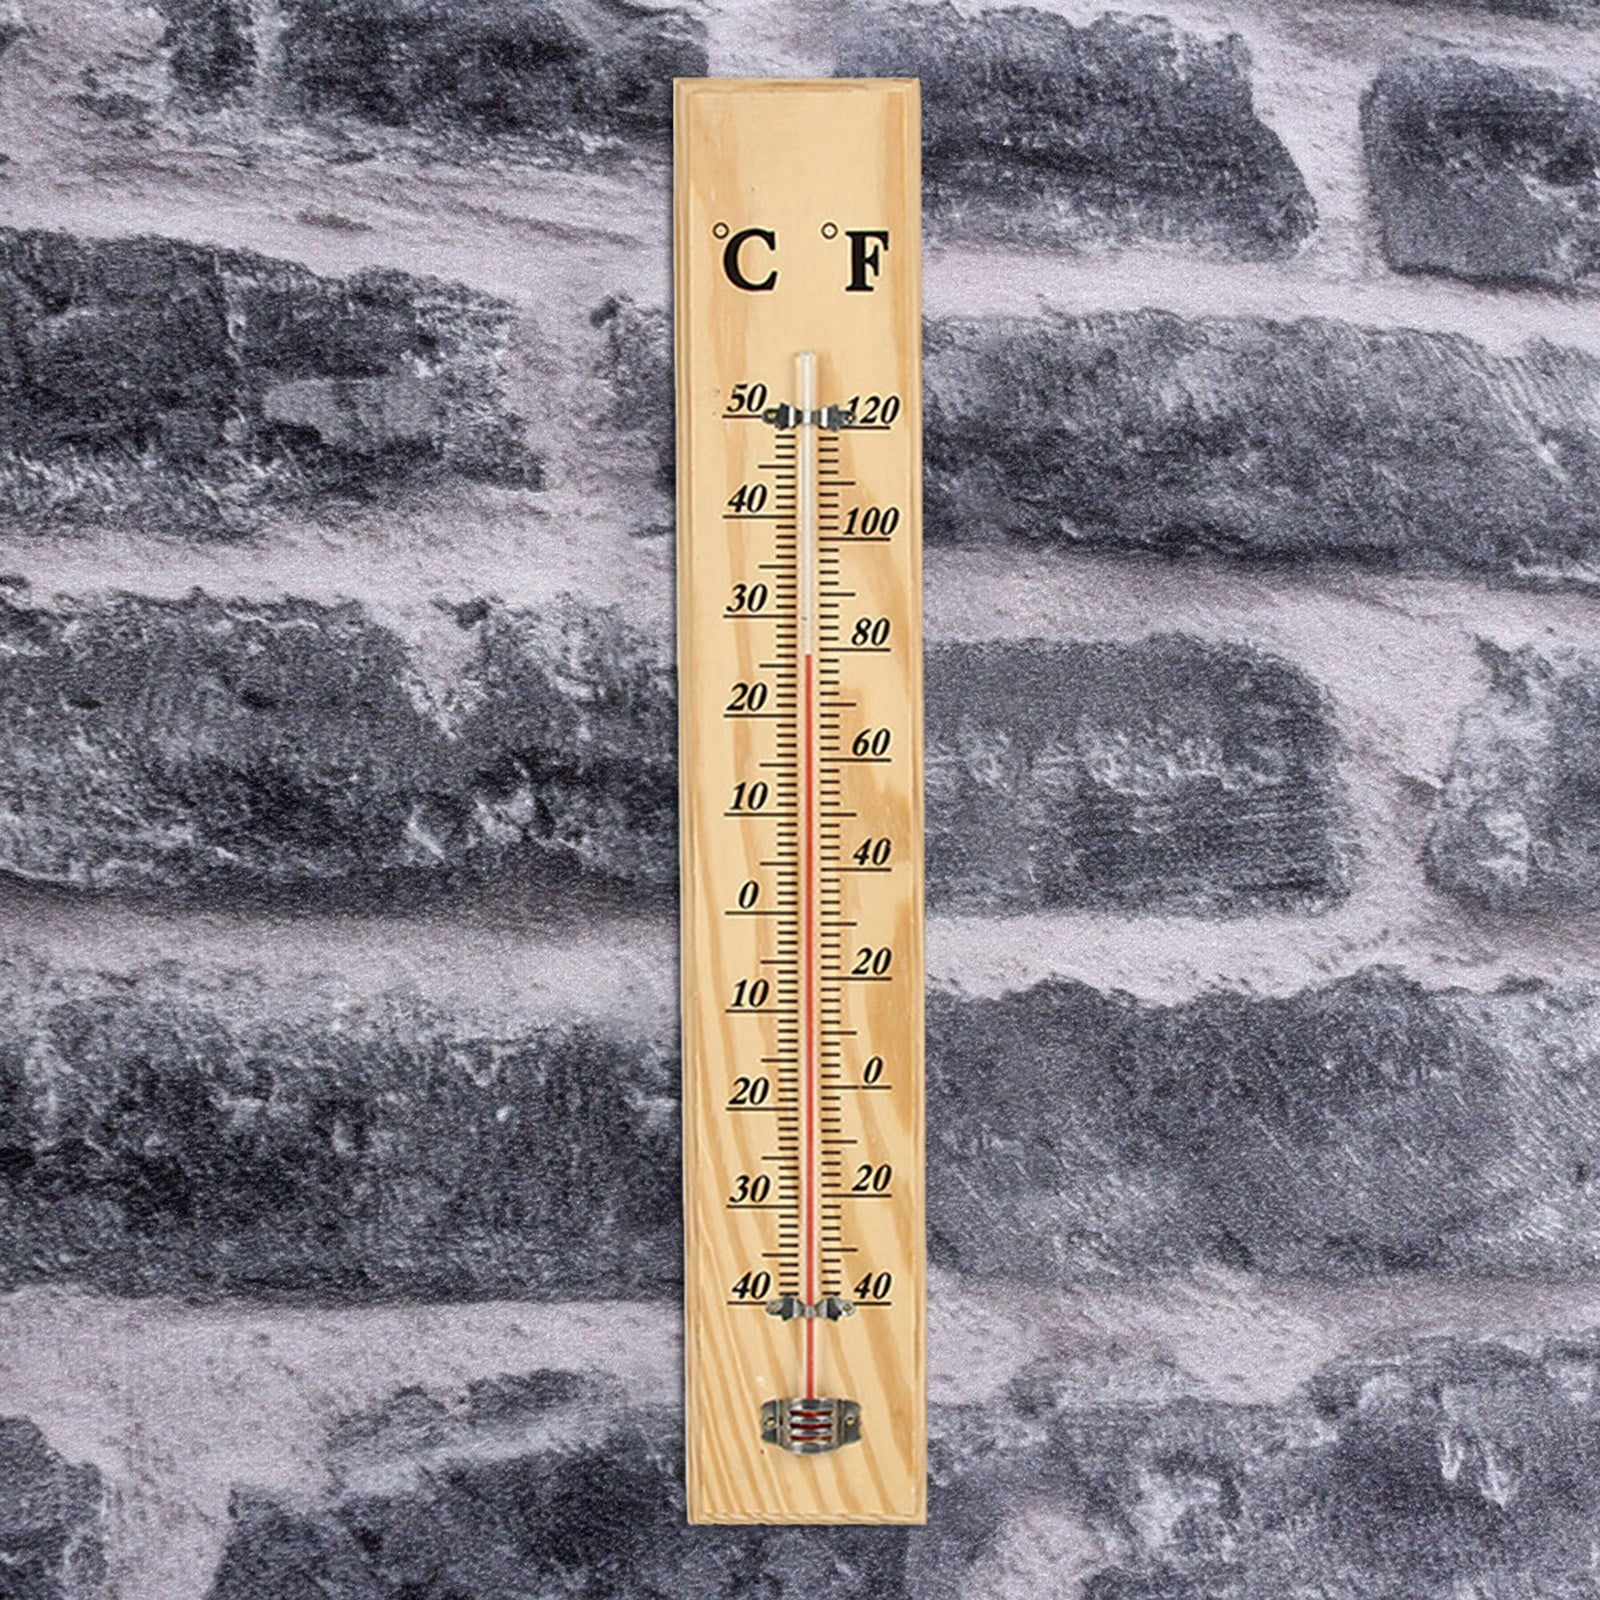 Geege B12Ph Wall Hang Thermometer Indoor Outdoor Garden House